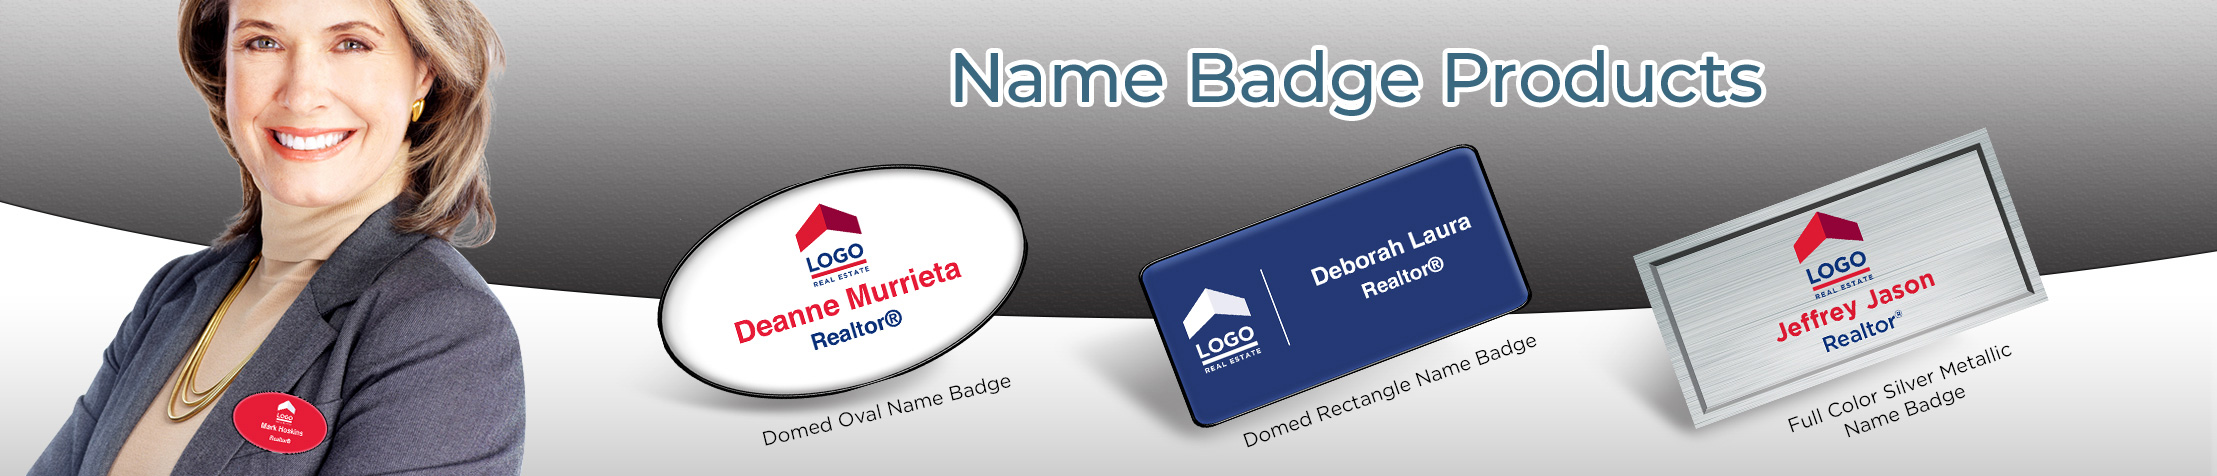 ERA Real Estate  Name Badge Products - ERA Real Estate Name Tags for Realtors | BestPrintBuy.com